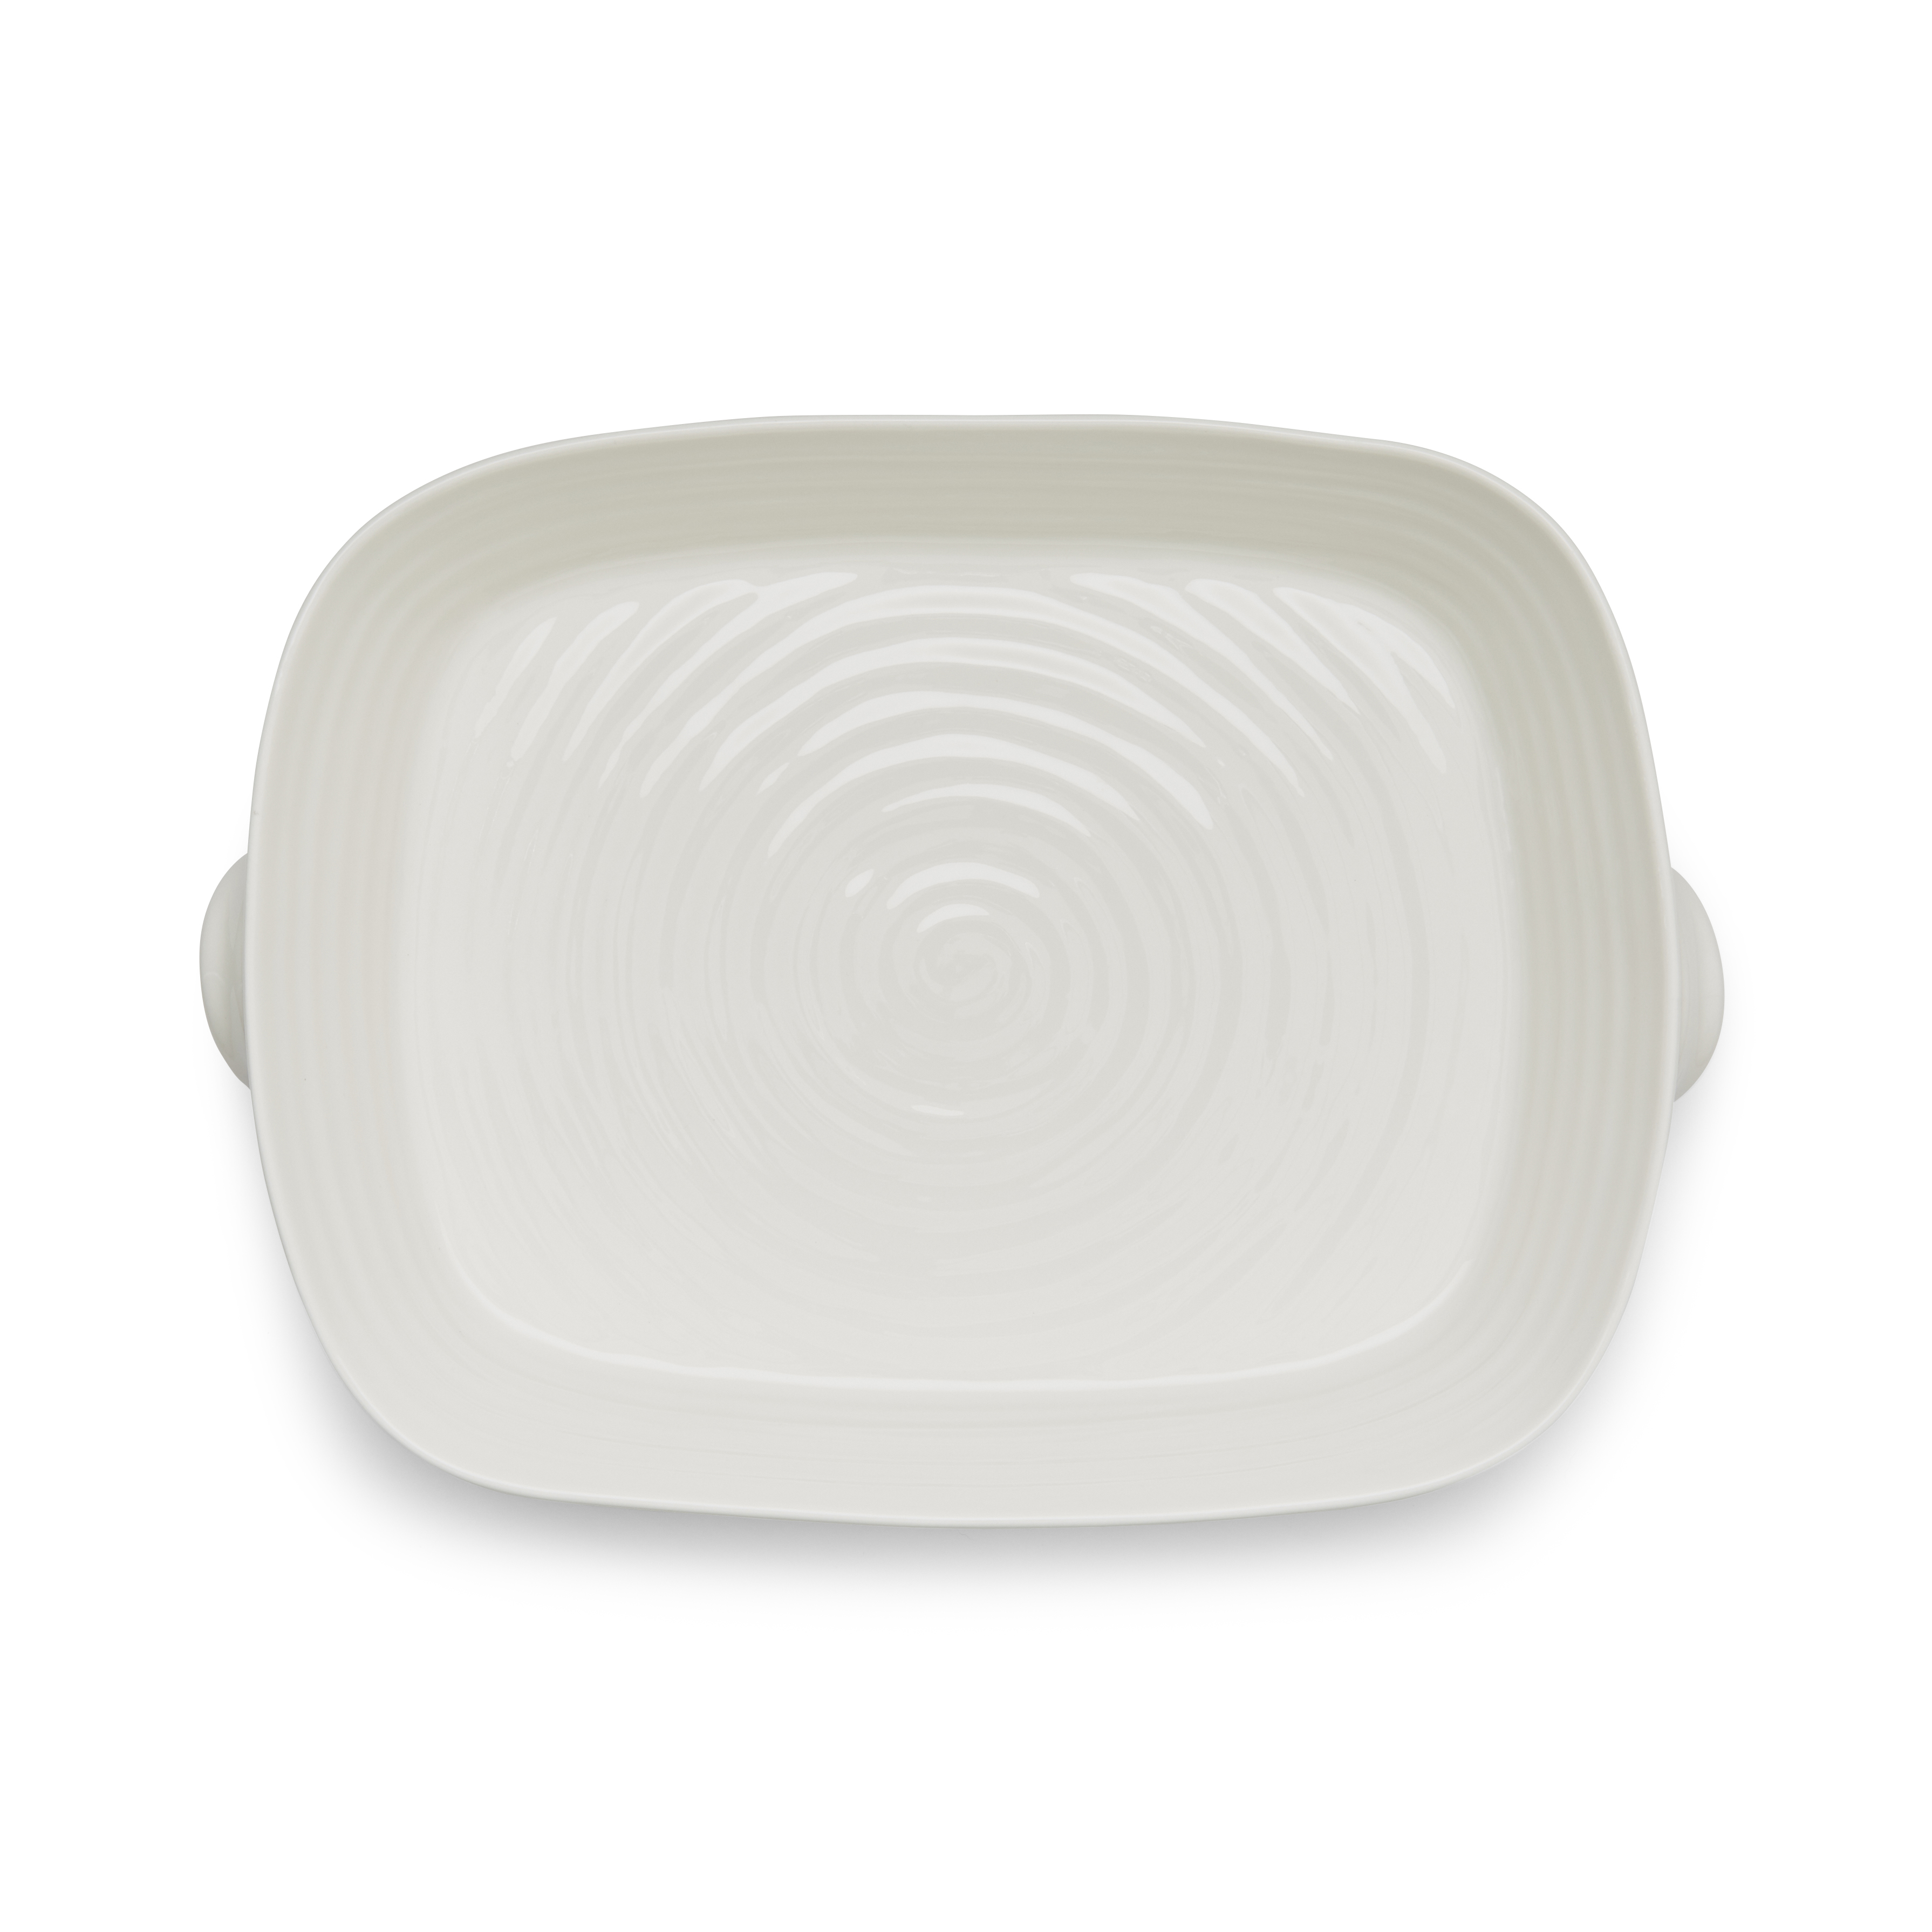 Sophie Conran White Large Handled Rectangular Roasting Dish image number null